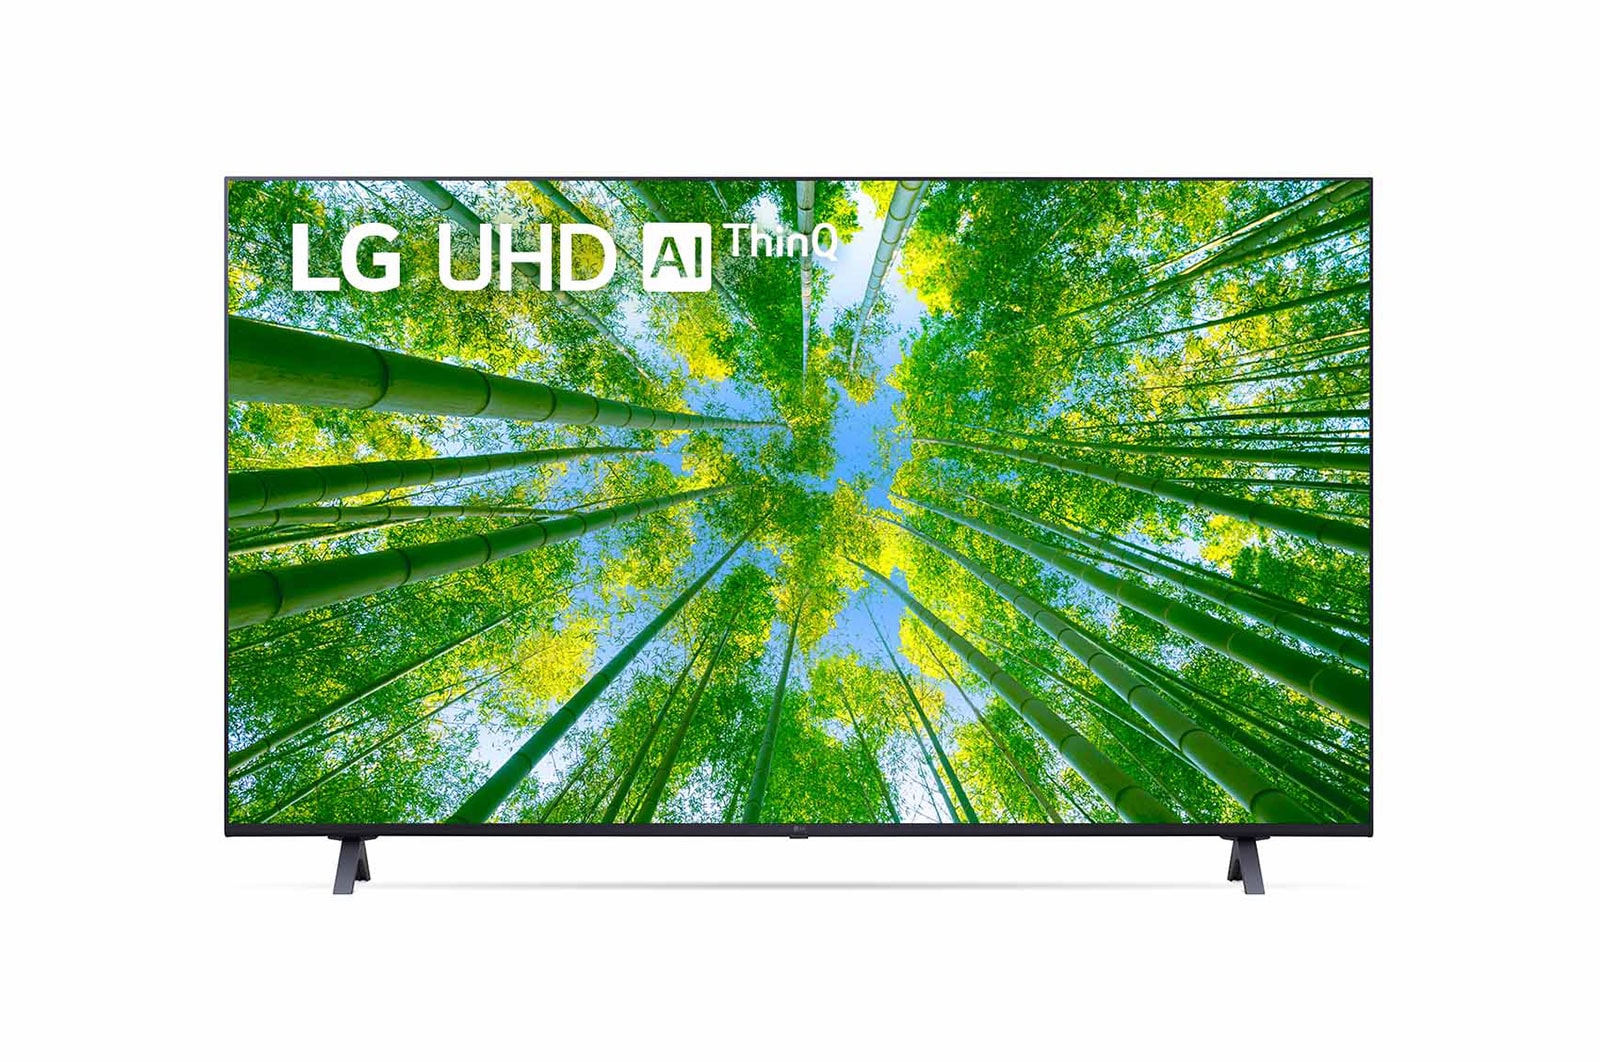 TV LG UHD AI ThinQ 55 LED 4K -Smart tv webOS -Procesador